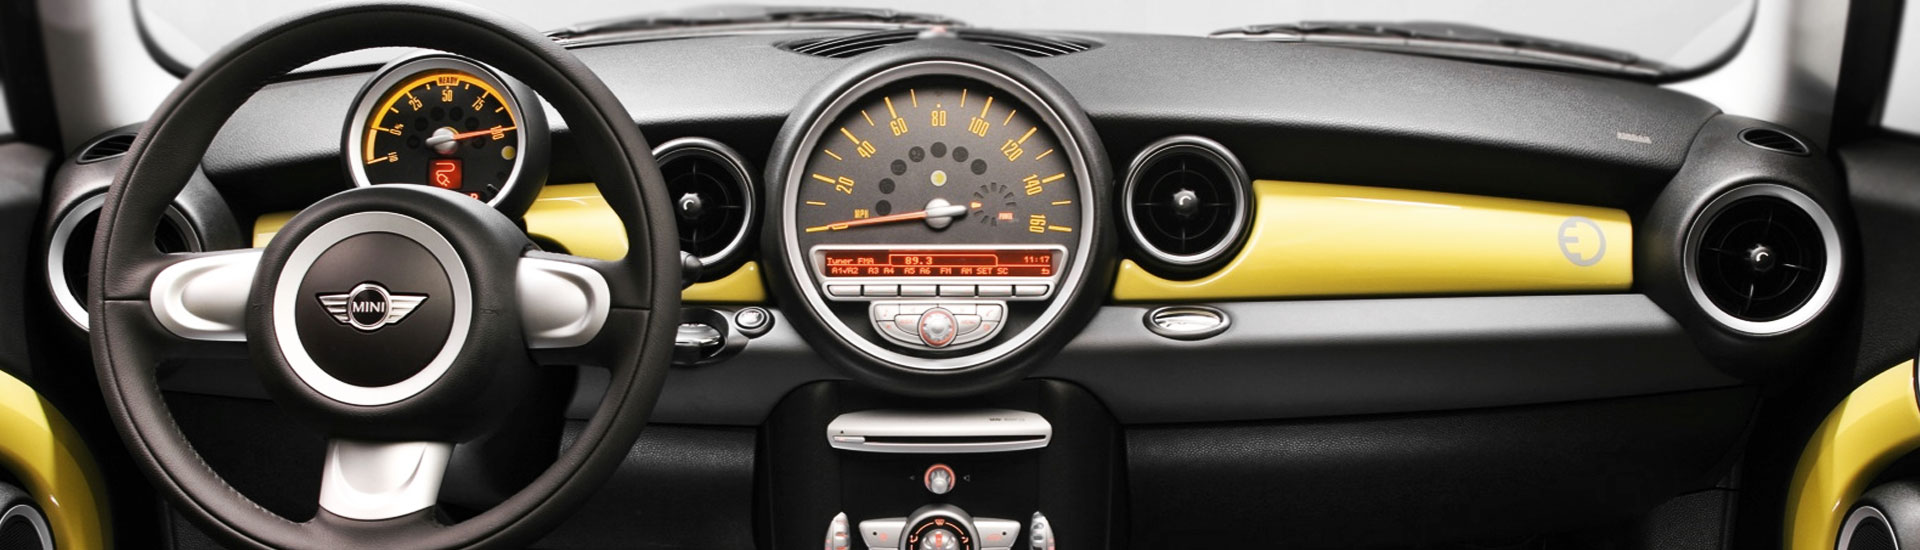 2012 MINI Cooper Custom Dash Kits